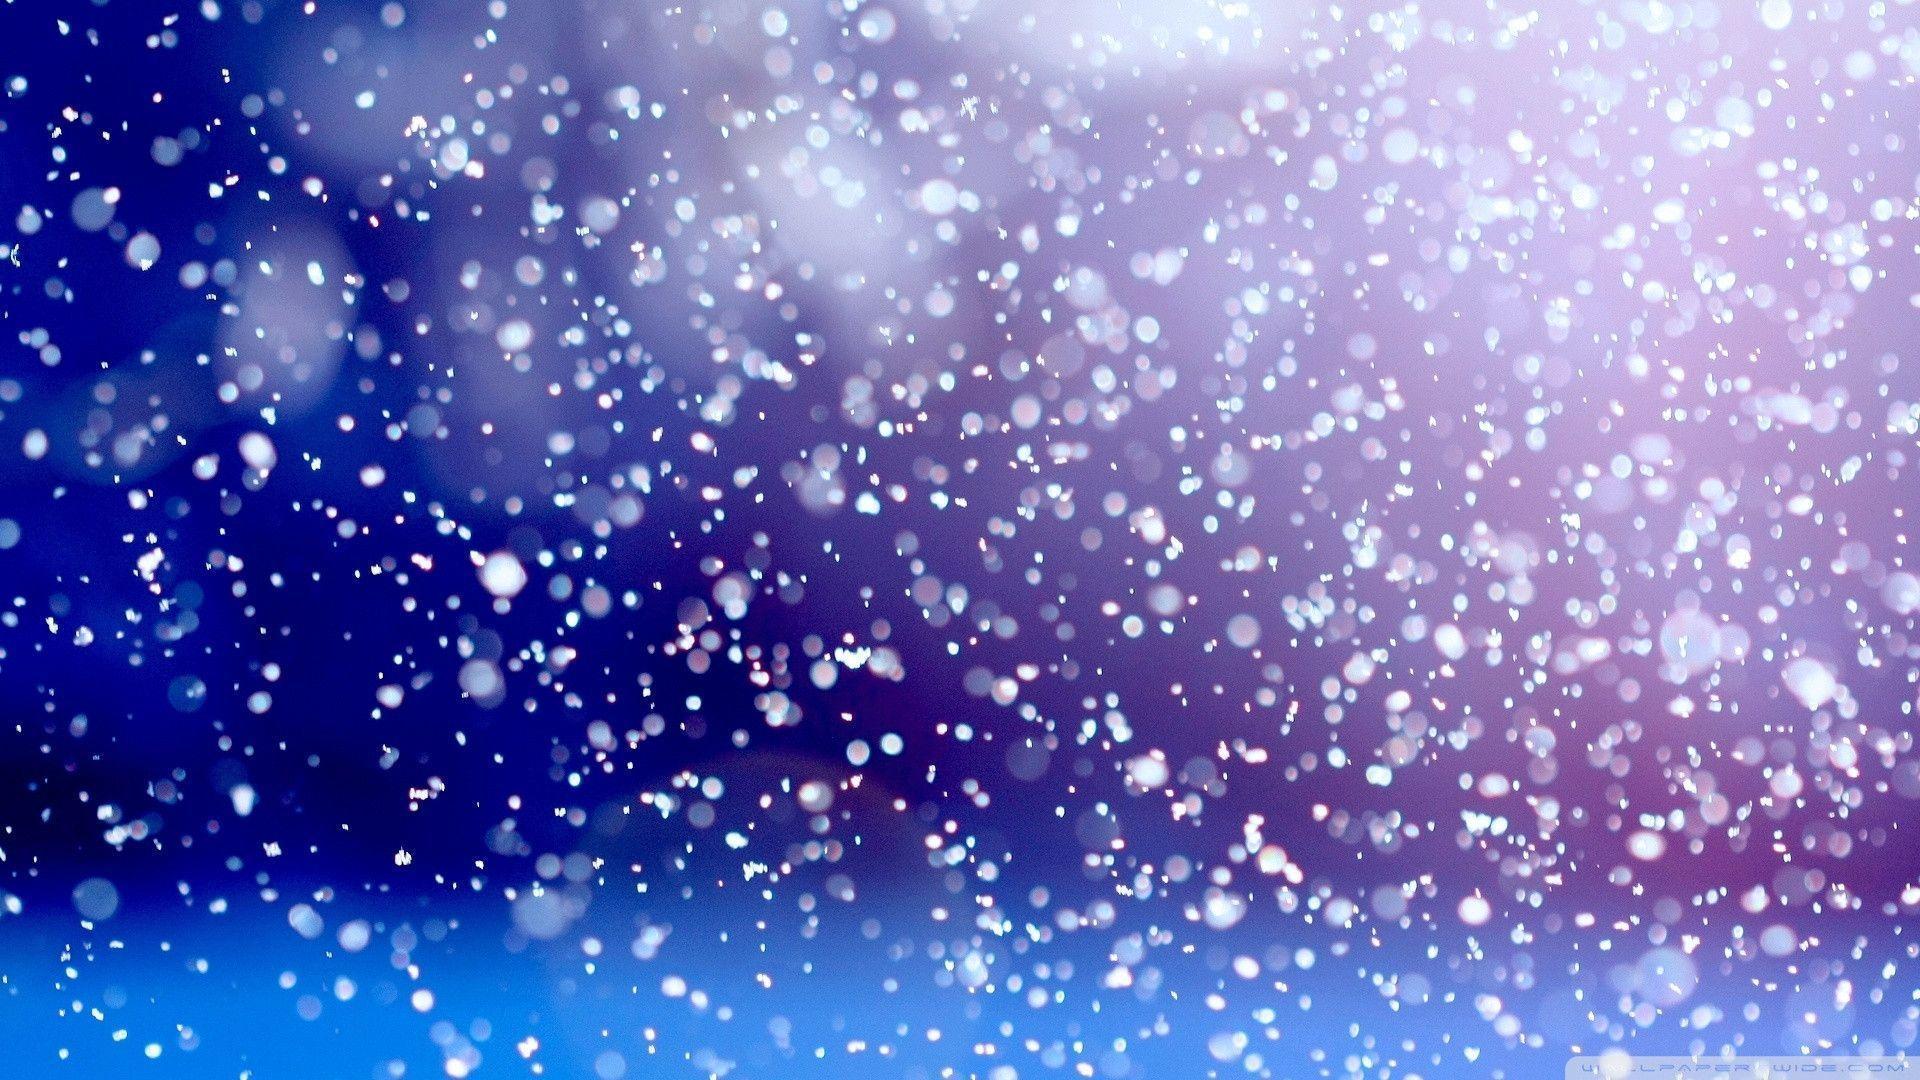 Download Decorative Snowflakes Wallpaper 1920x1080 #